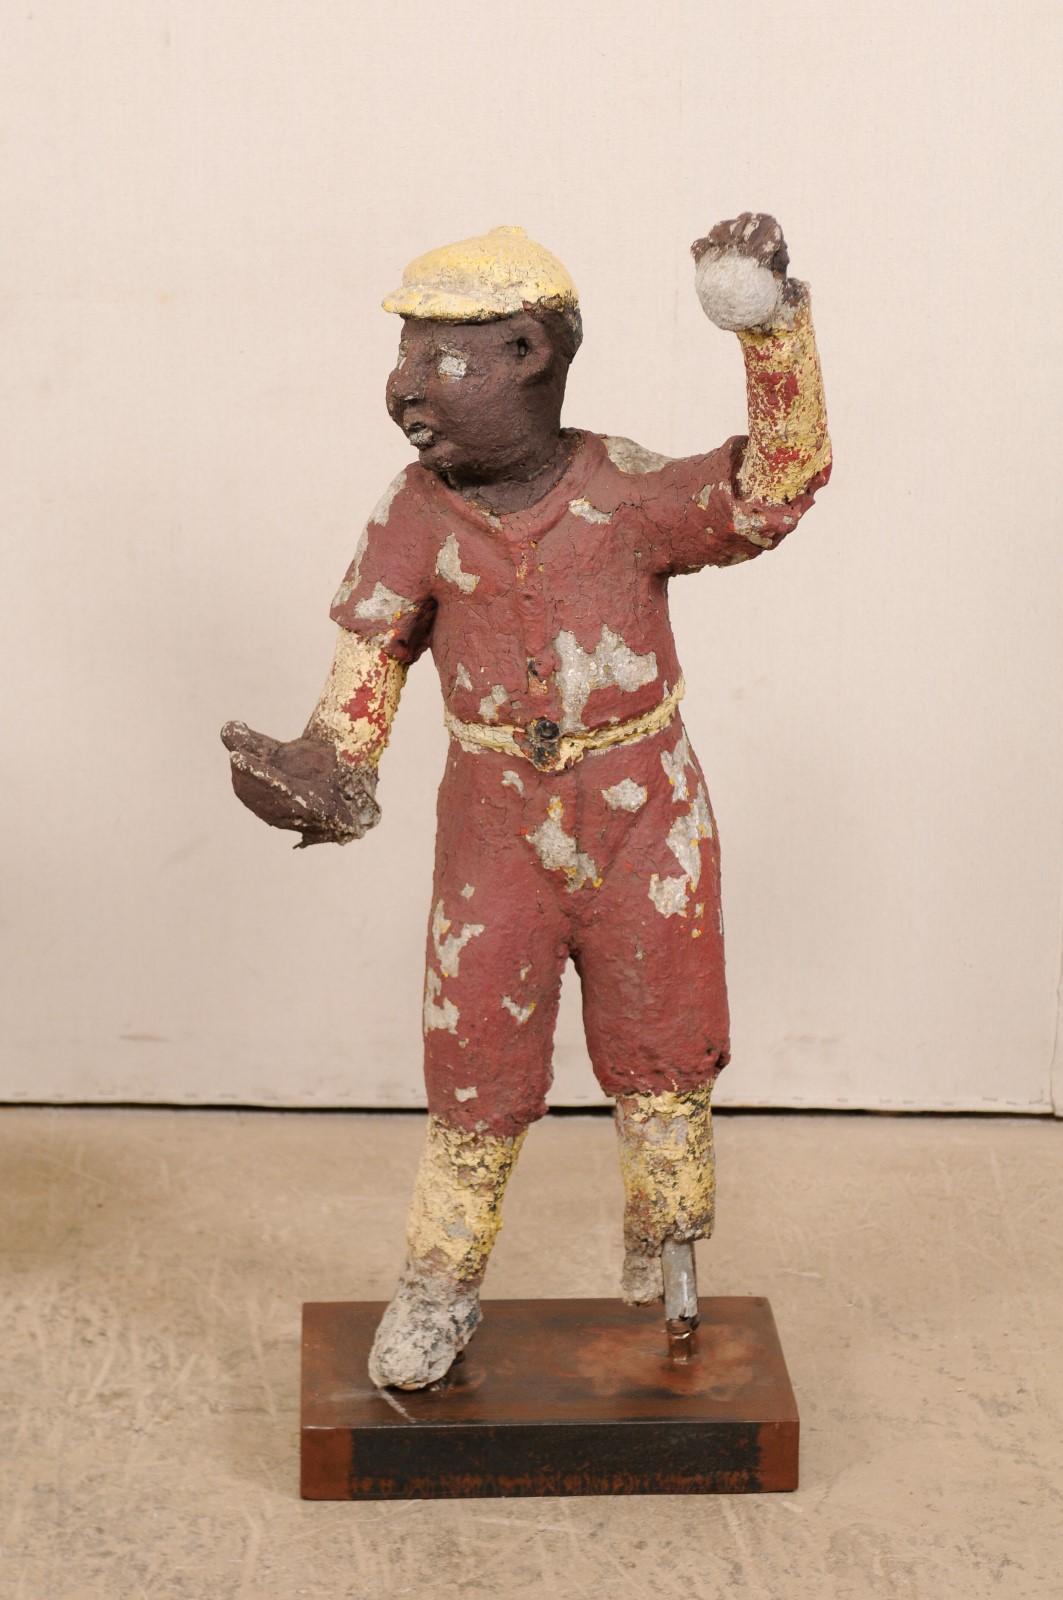 A Set of Black Americana Baseball Memorabilia Folk Art Figures, Circa 1930s-40s For Sale 9